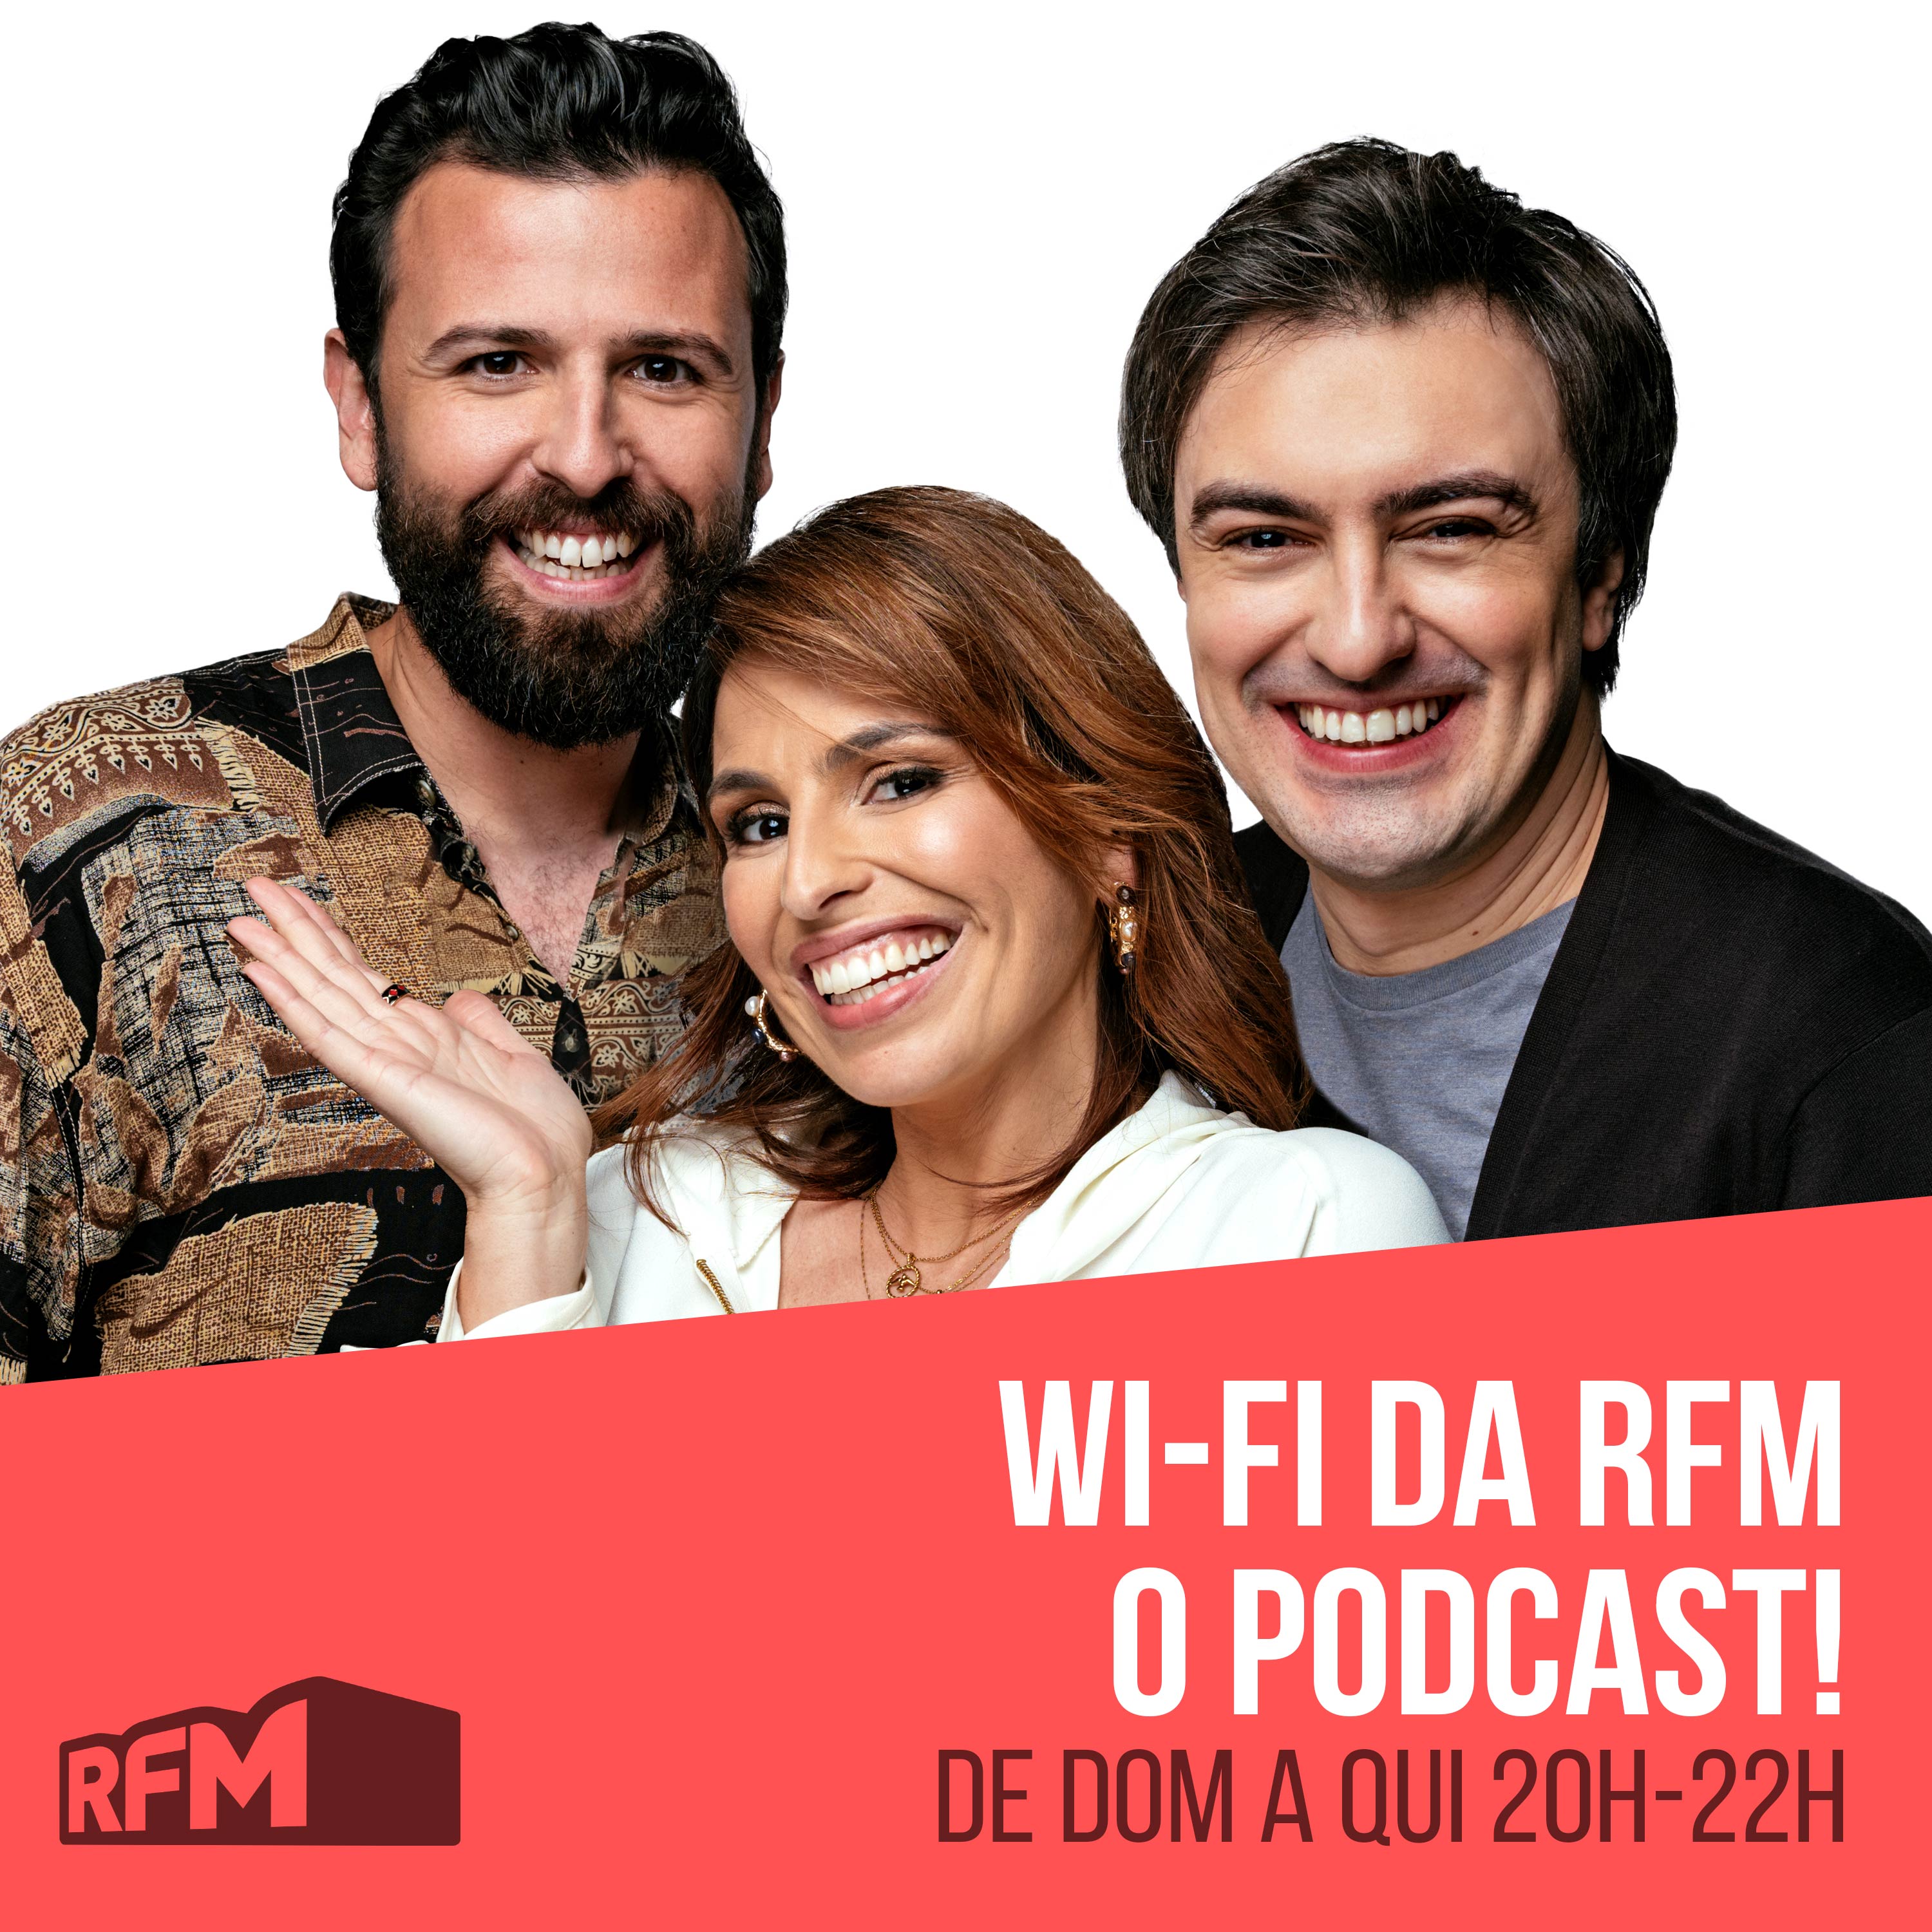 Wi-Fi PODCAST MATIAS DAMÁSIO